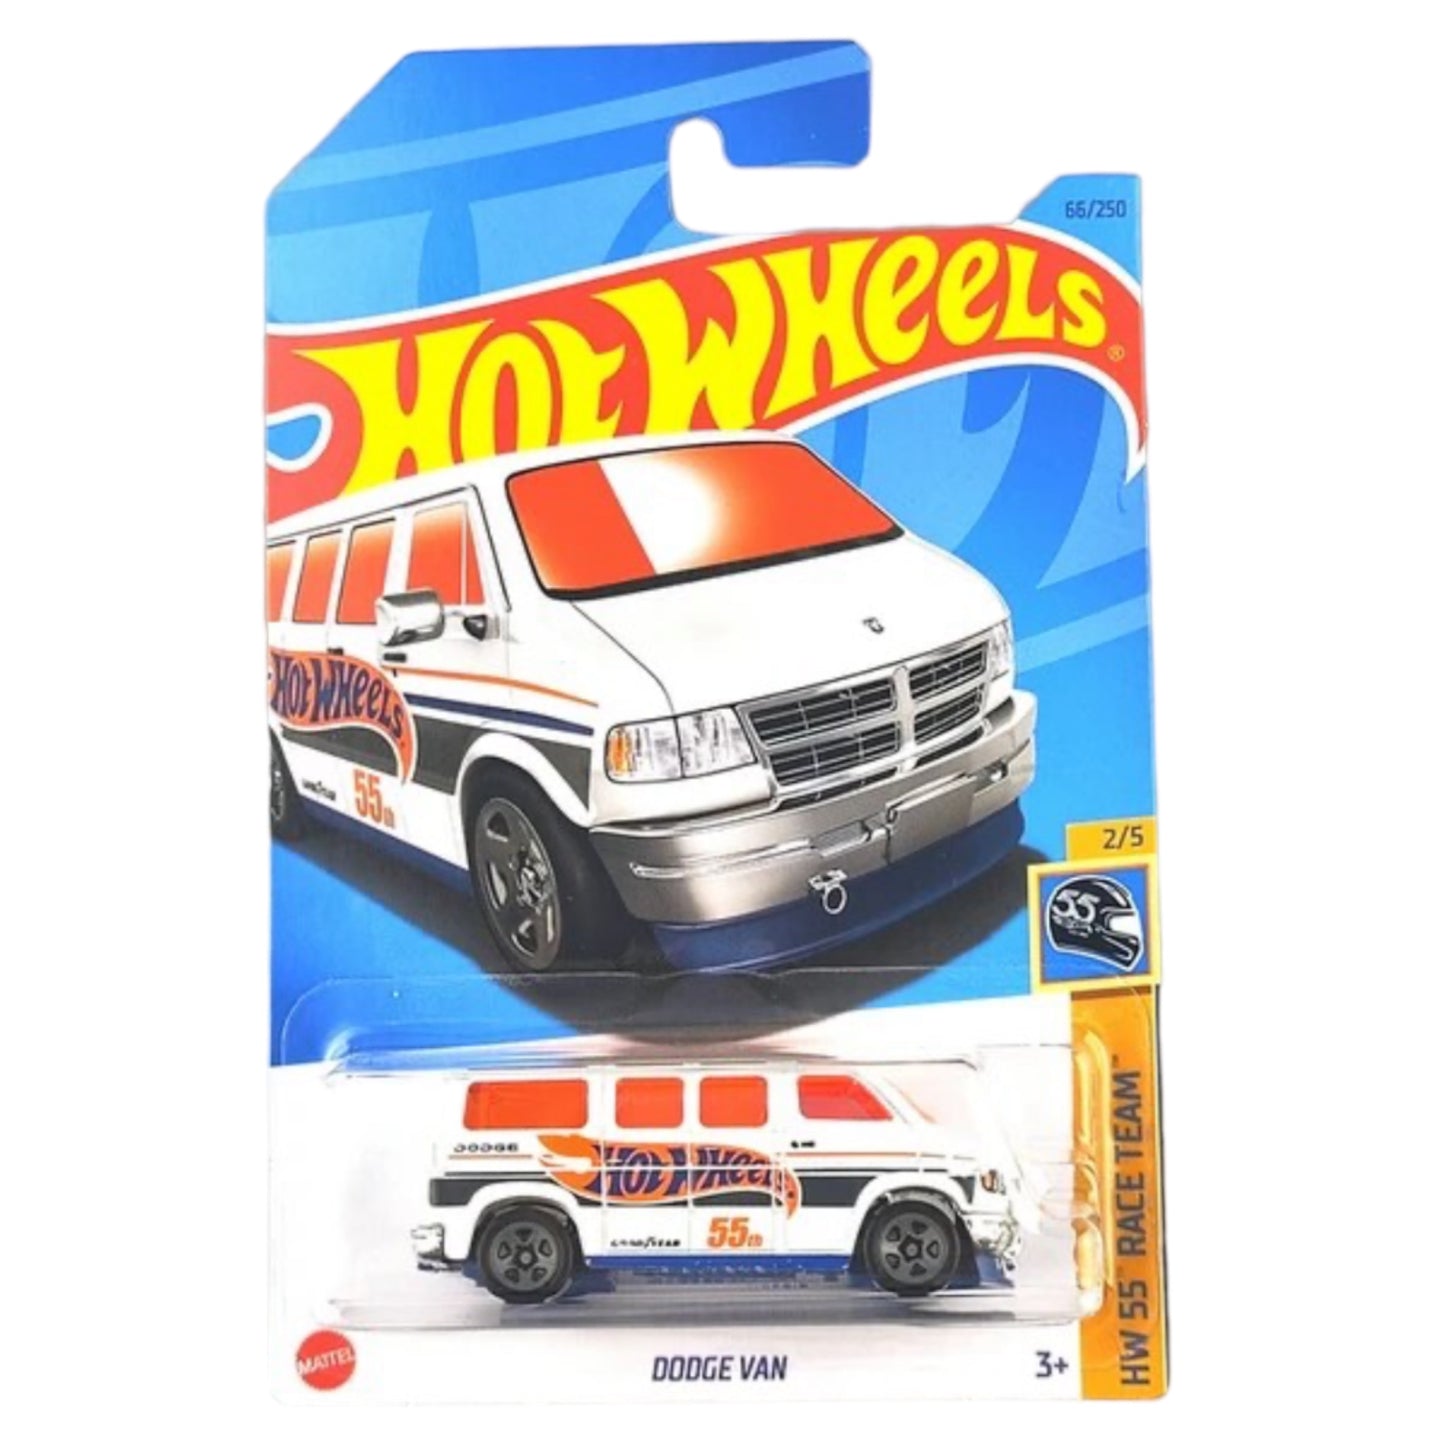 Hot Wheels HW 55 RACE TEAM Mattel